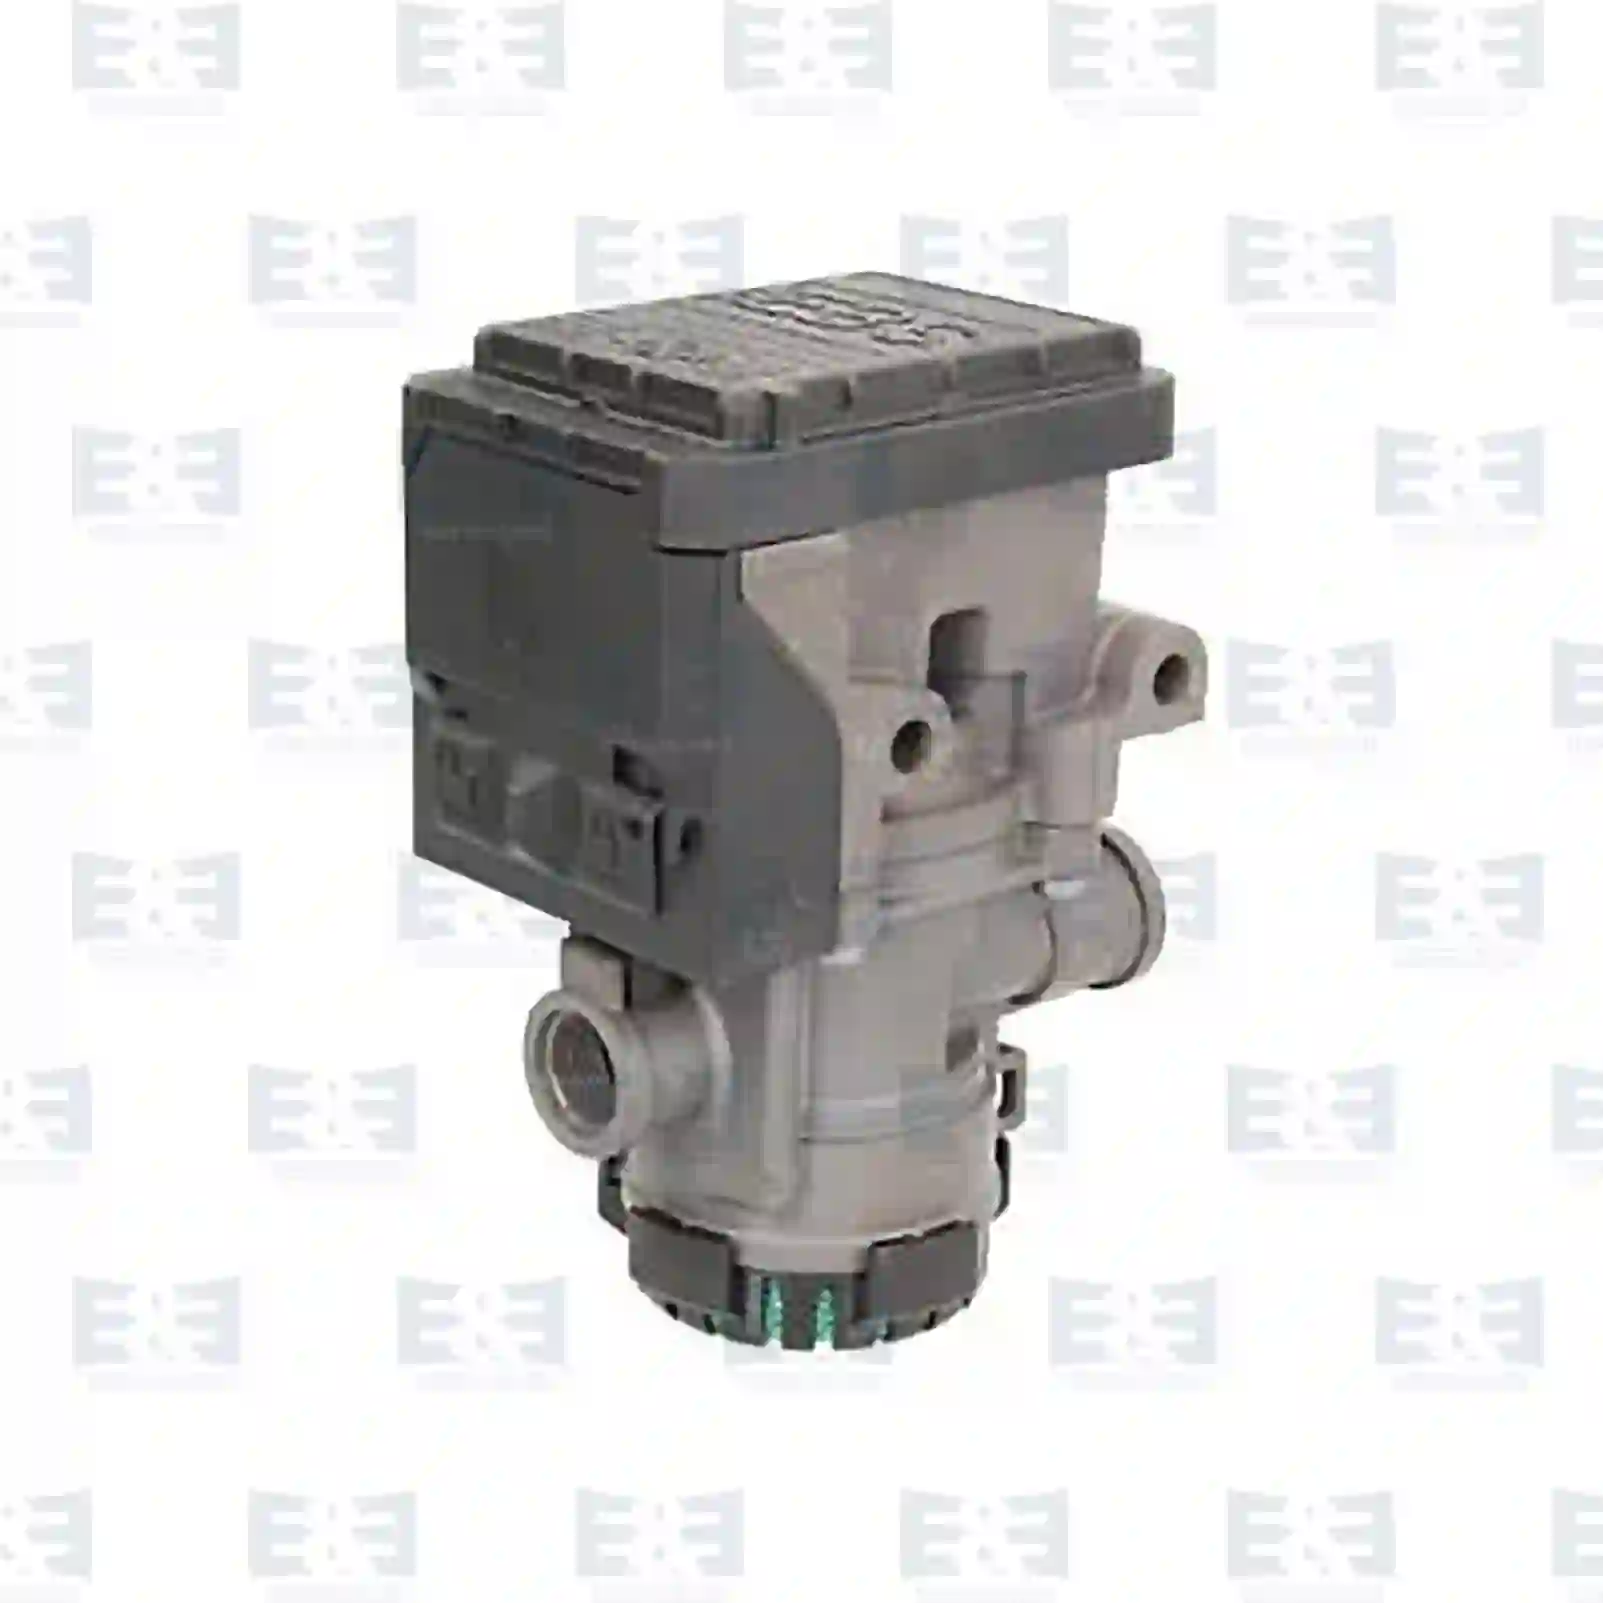 Modulating valve, EBS, reman. / without old core, 2E2297110, 81521066016, 81521066025, 81521066041, 81521066047, 81521066049, 81521069016, 2V5611555B ||  2E2297110 E&E Truck Spare Parts | Truck Spare Parts, Auotomotive Spare Parts Modulating valve, EBS, reman. / without old core, 2E2297110, 81521066016, 81521066025, 81521066041, 81521066047, 81521066049, 81521069016, 2V5611555B ||  2E2297110 E&E Truck Spare Parts | Truck Spare Parts, Auotomotive Spare Parts